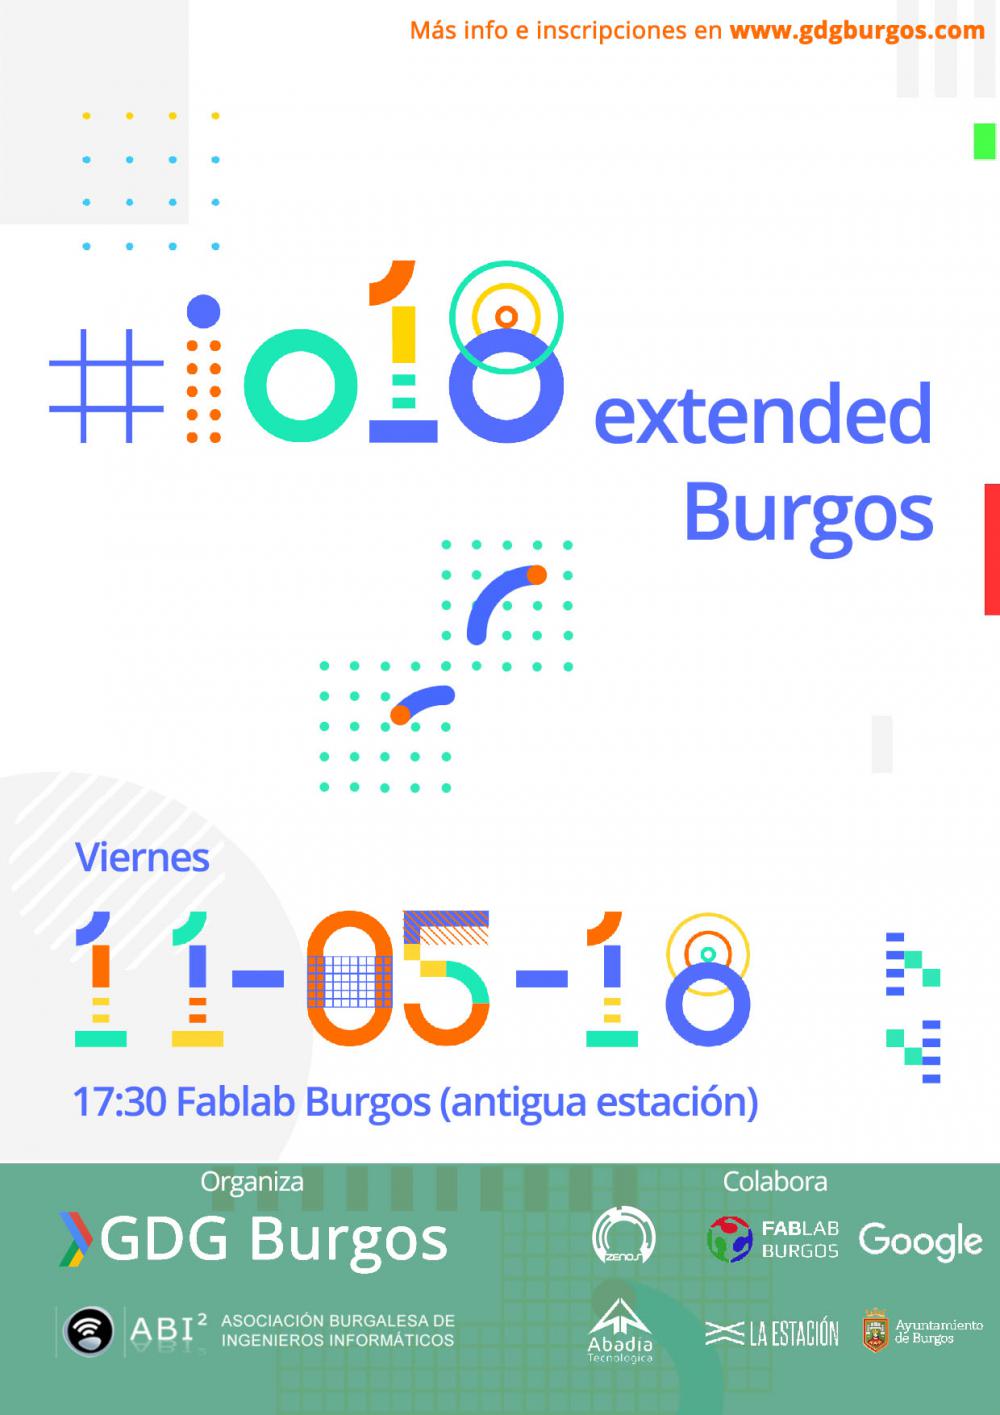 Google I/O extended 2018 Burgos